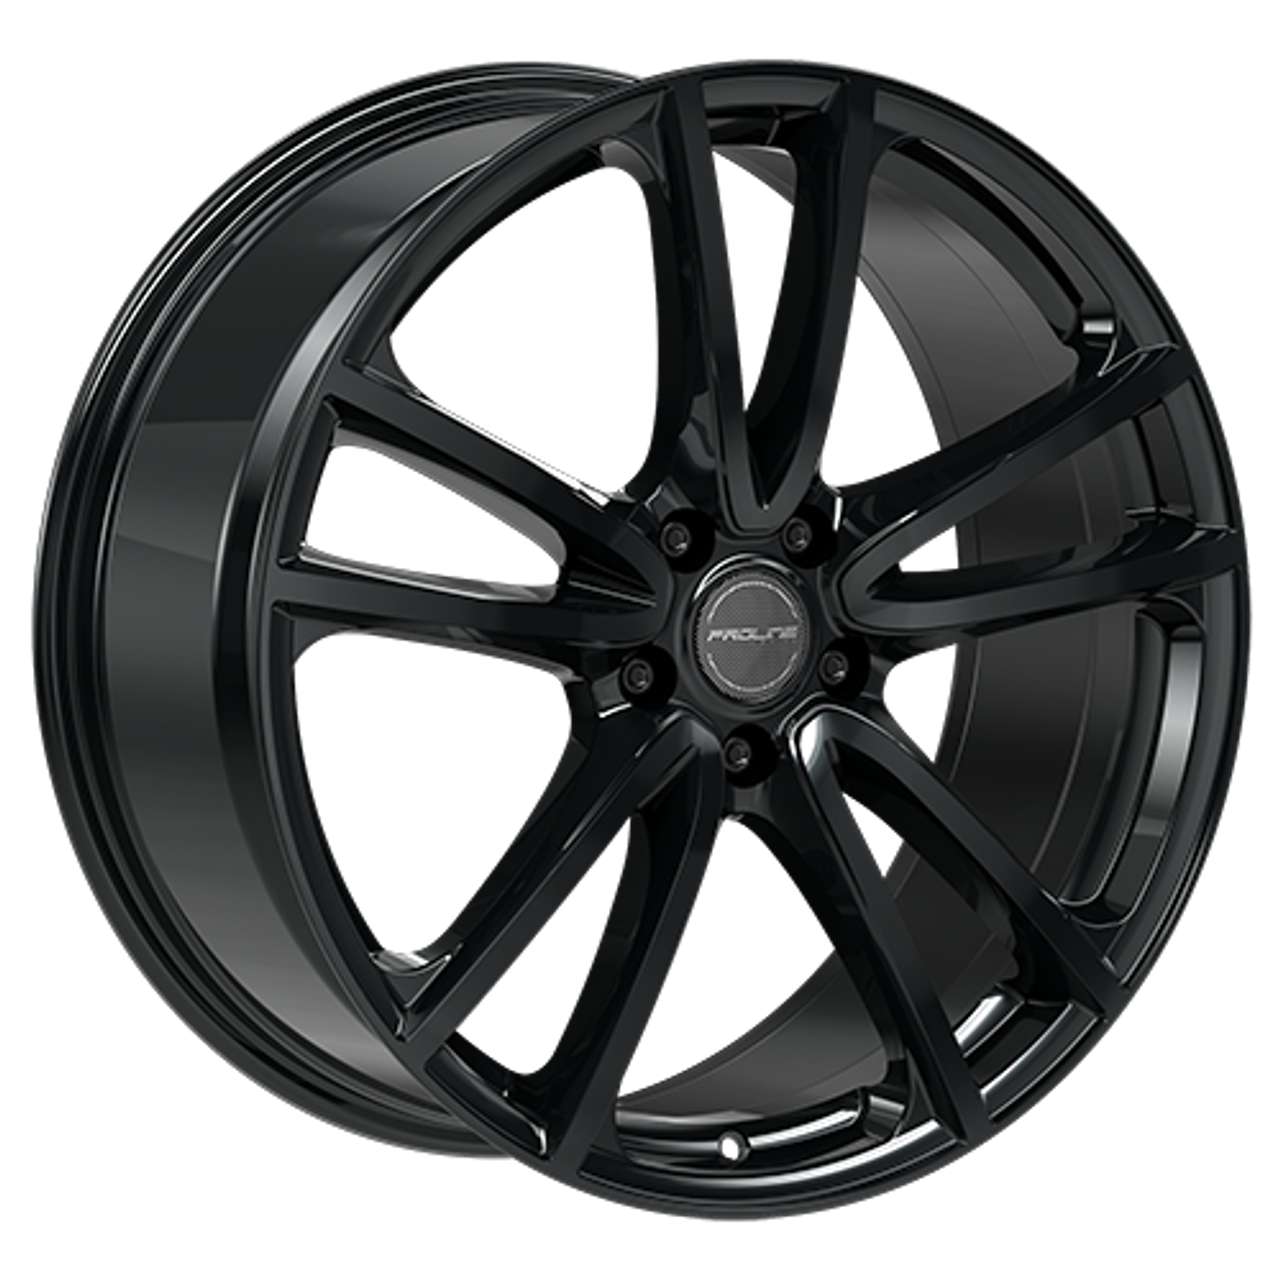 PROLINE CX300 black glossy 8.5Jx20 5x112 ET25